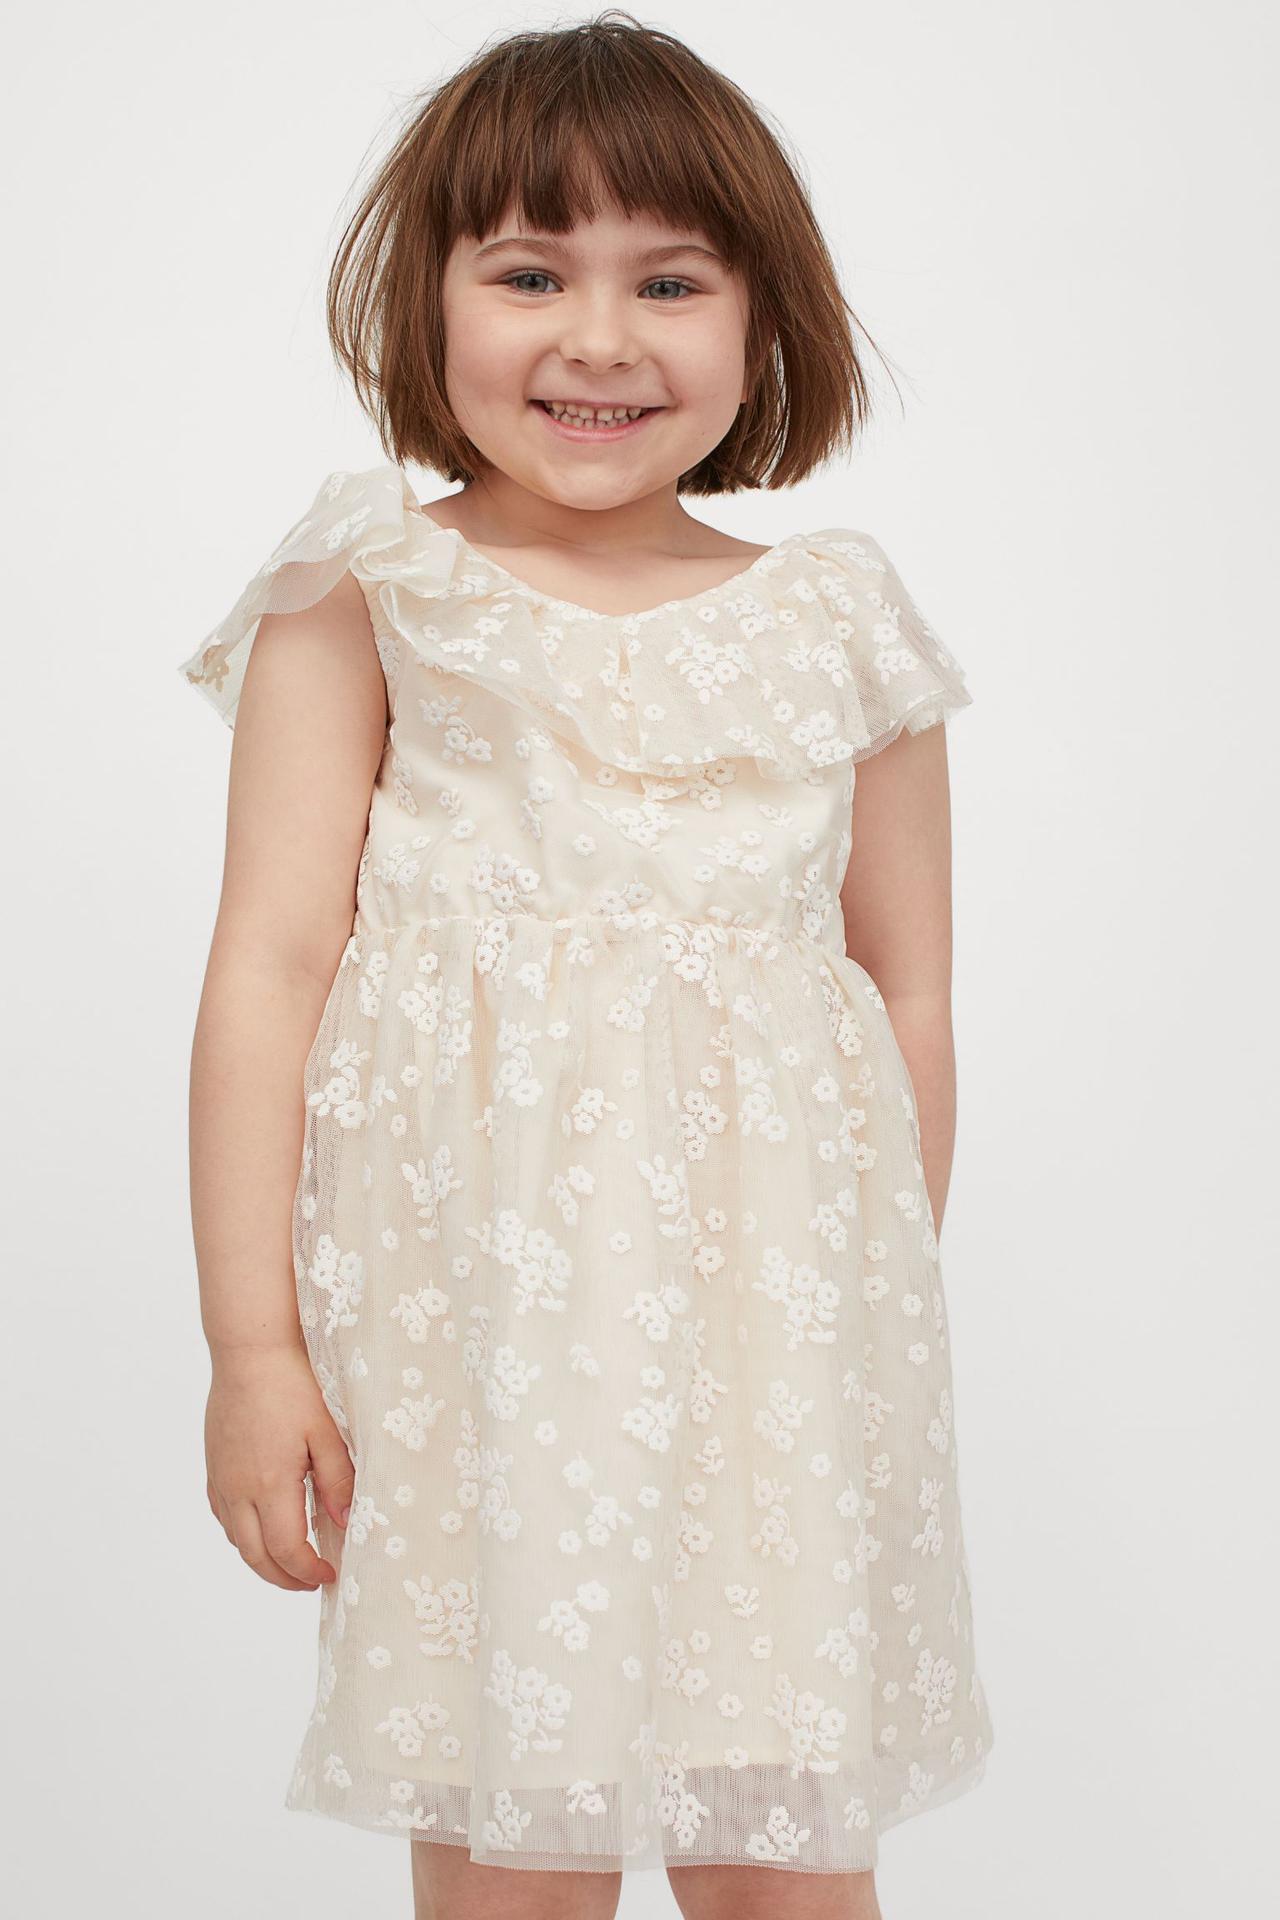 US Seller White Royal Wedding Formal Pleated Baby Sleeves Gown Flower Girl Dress 